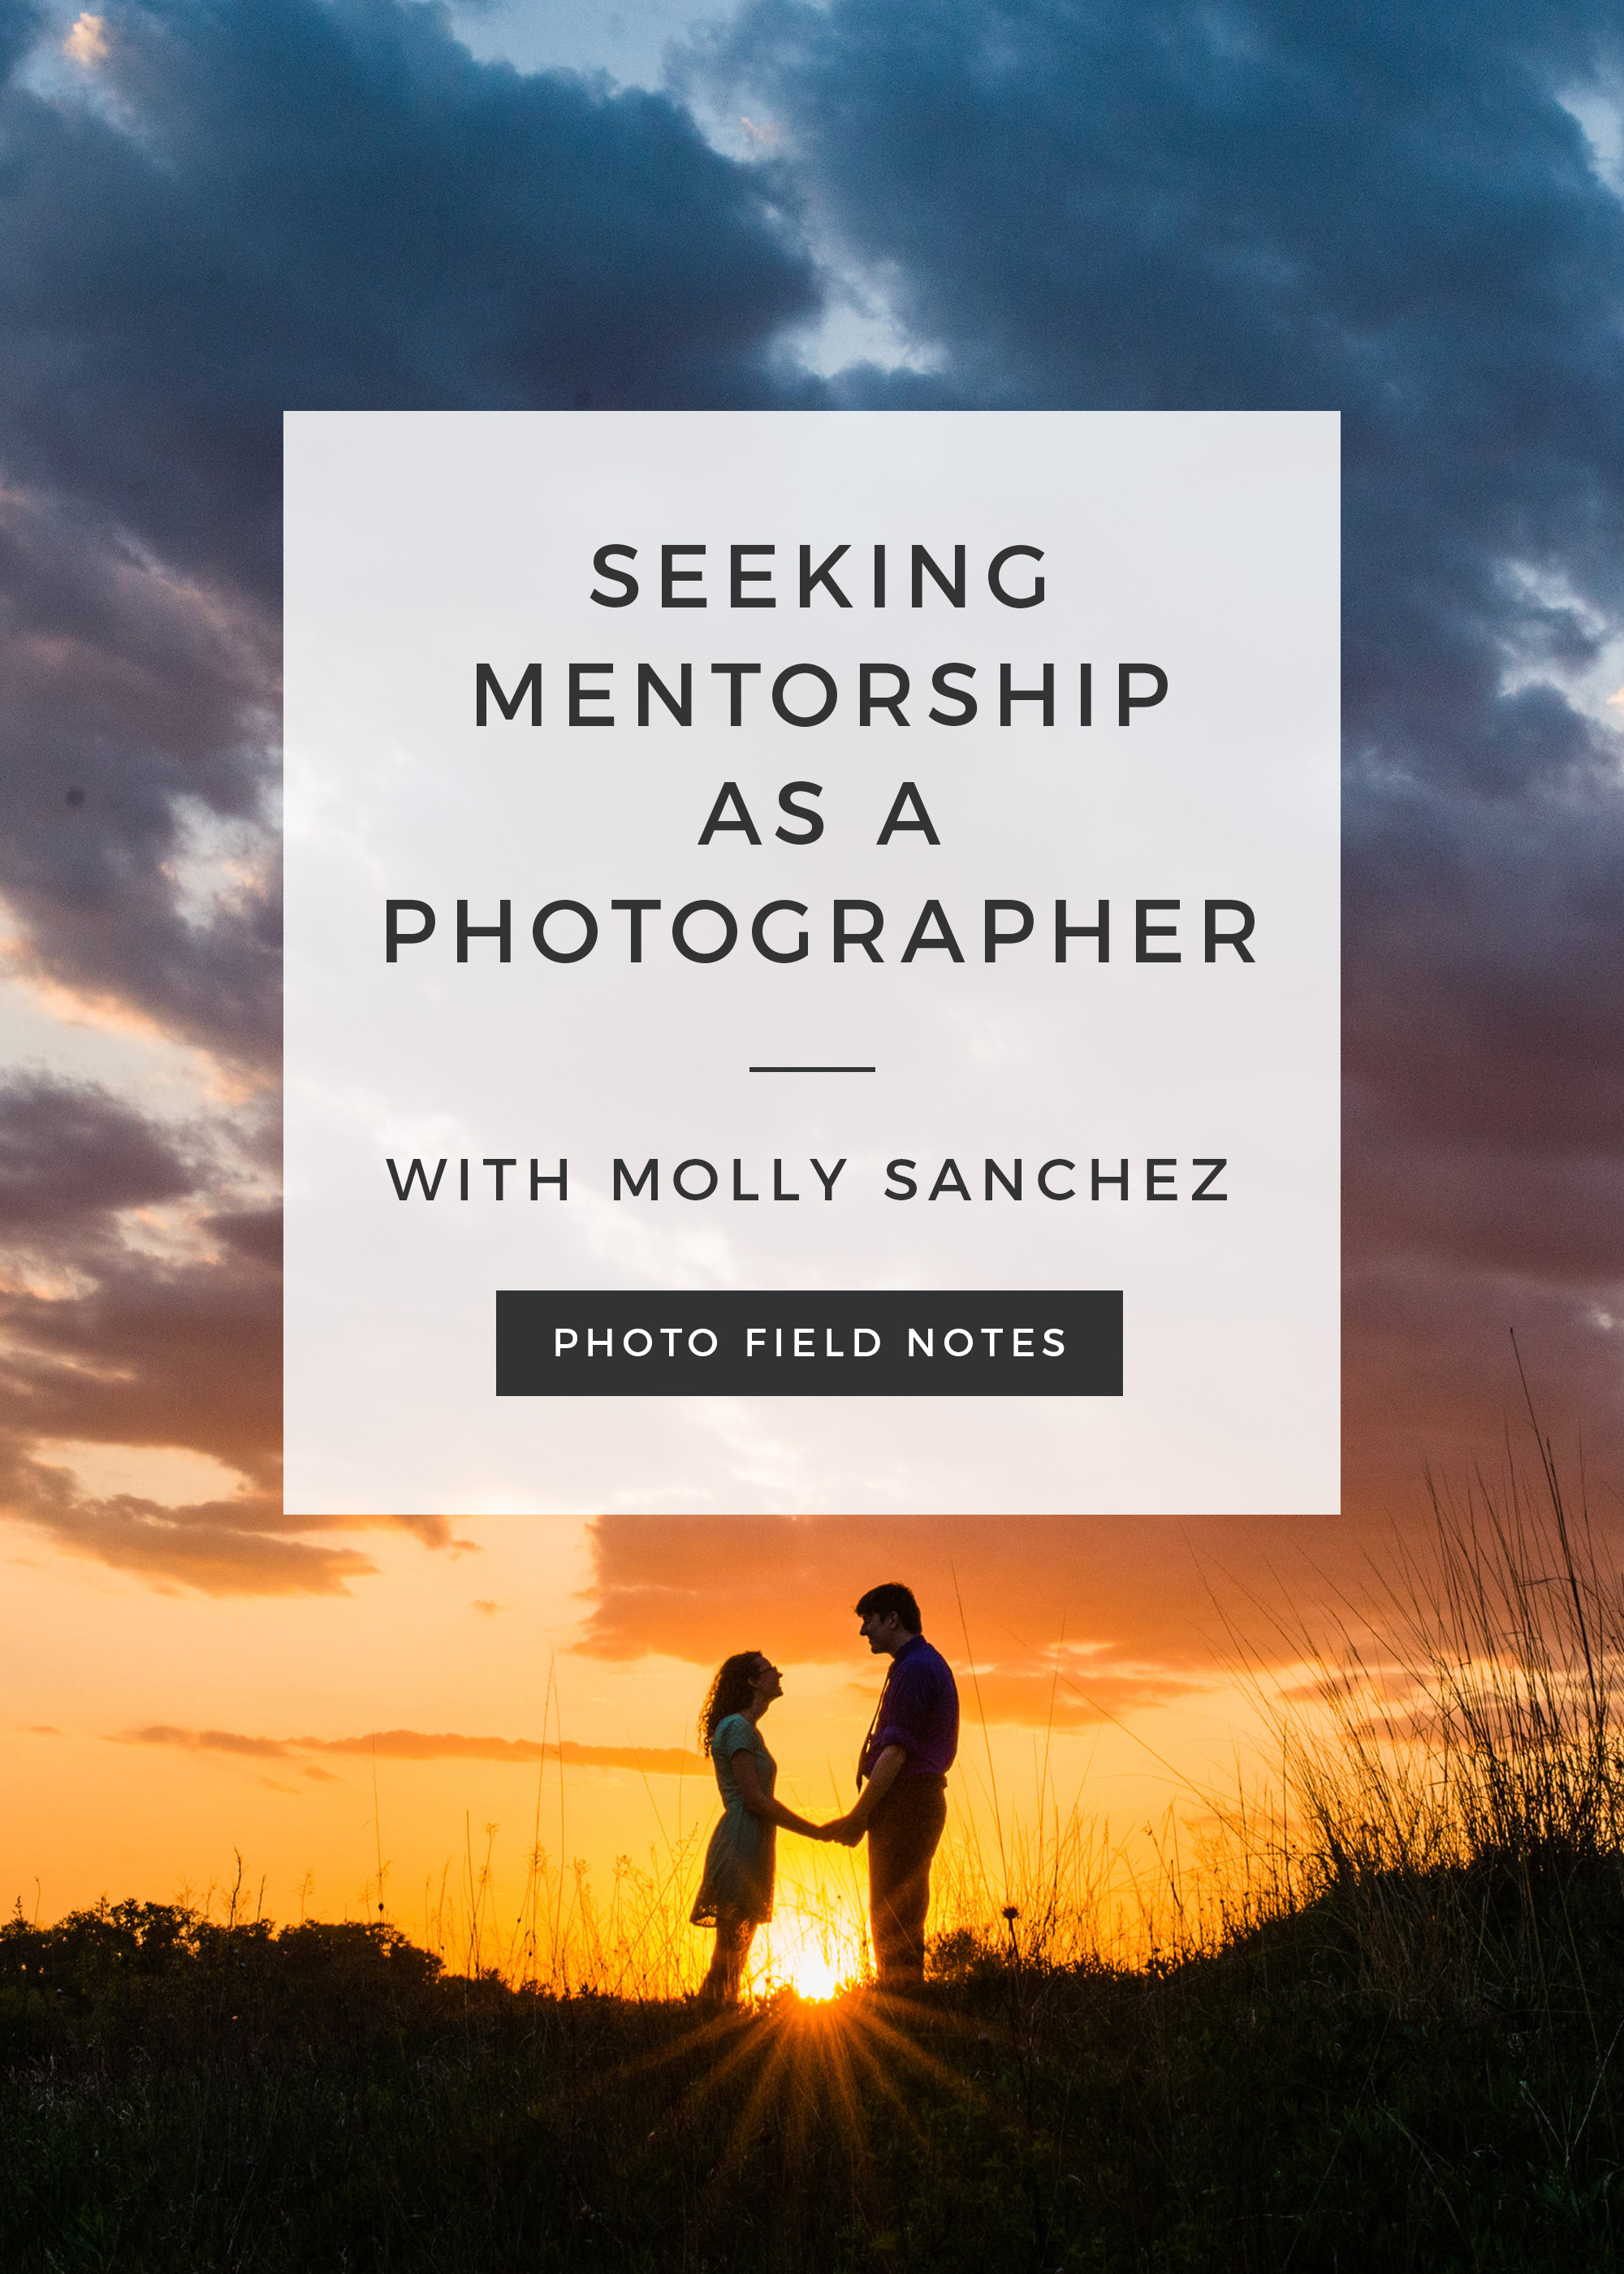 Seeking mentorship as a photographer with Molly Sanchez